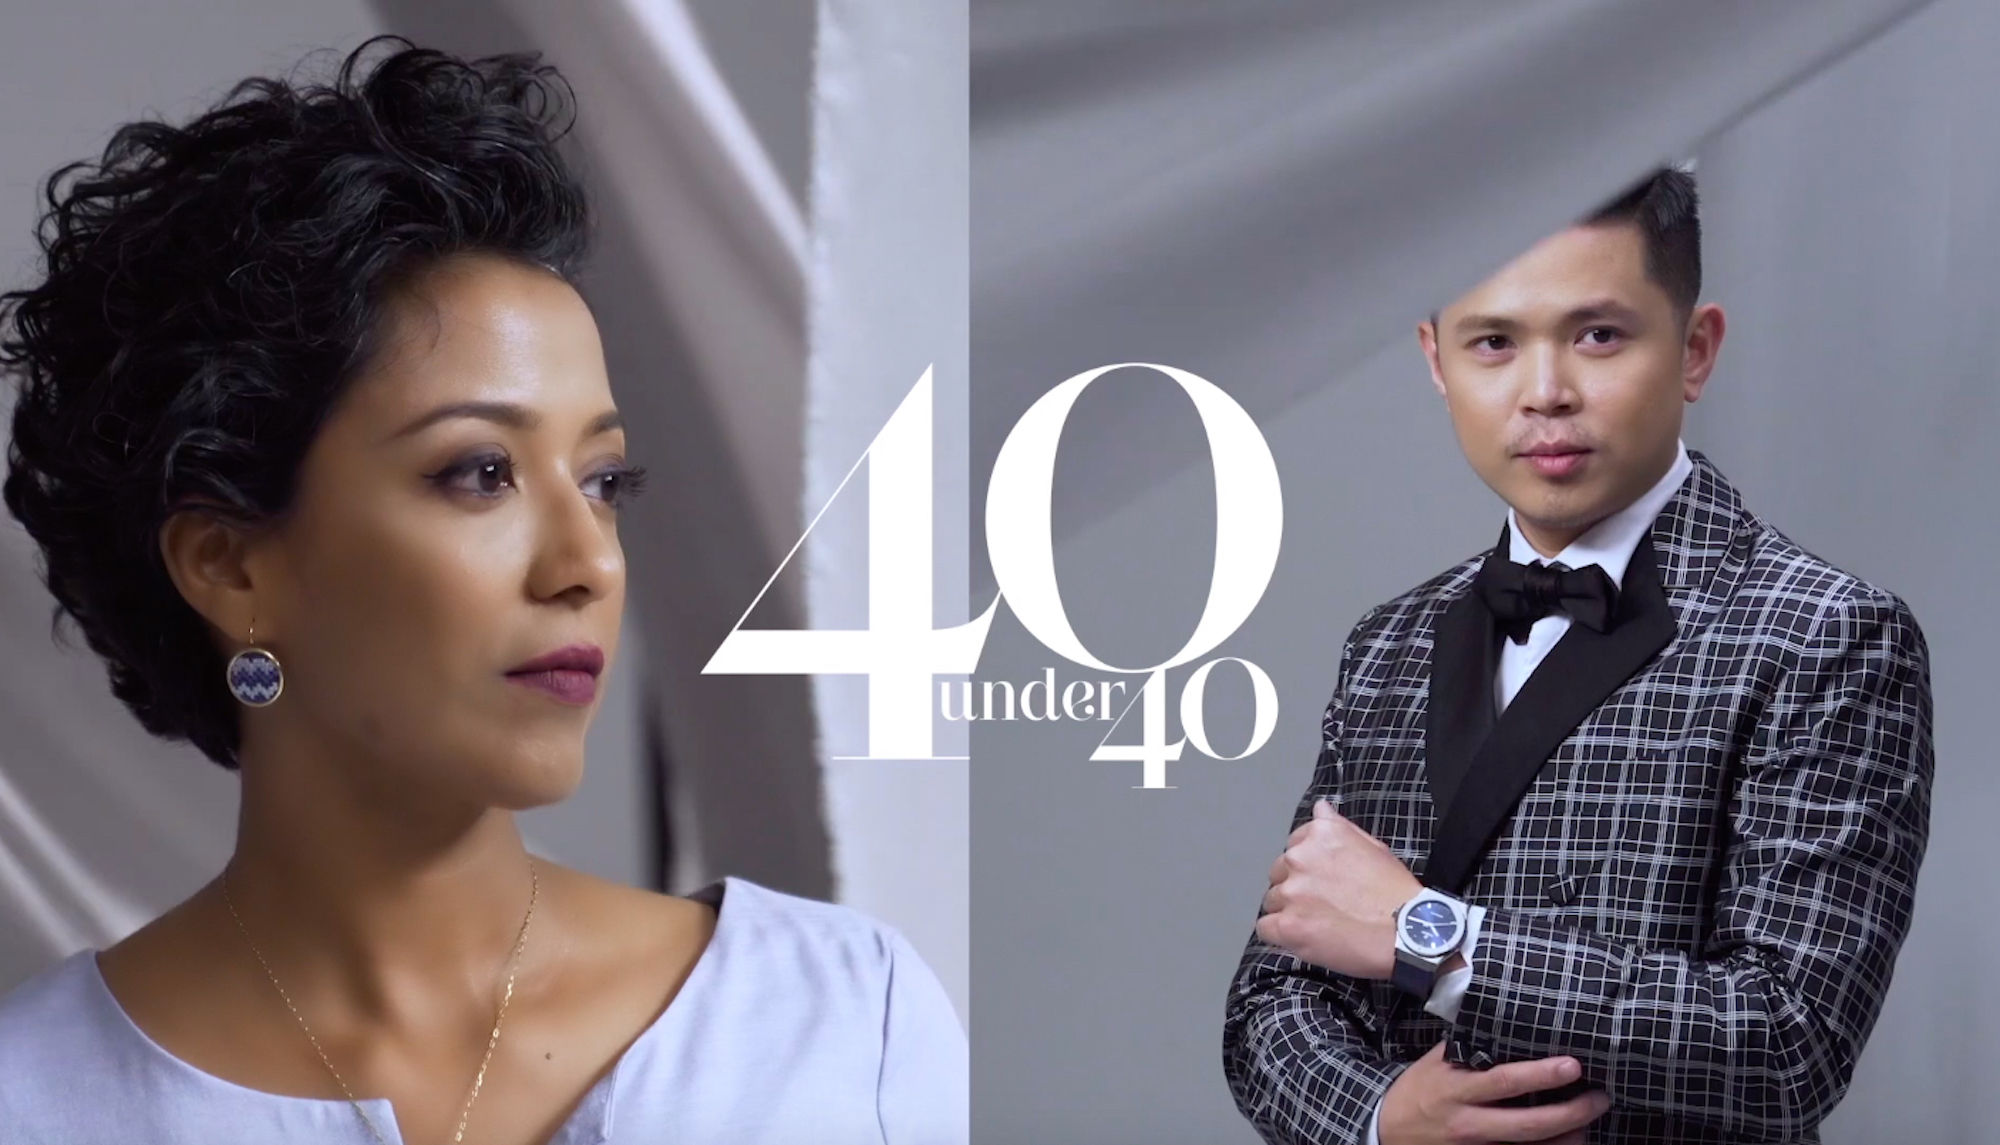 Video: Prestige Malaysia’s 40 Under 40 Talks Inspiration